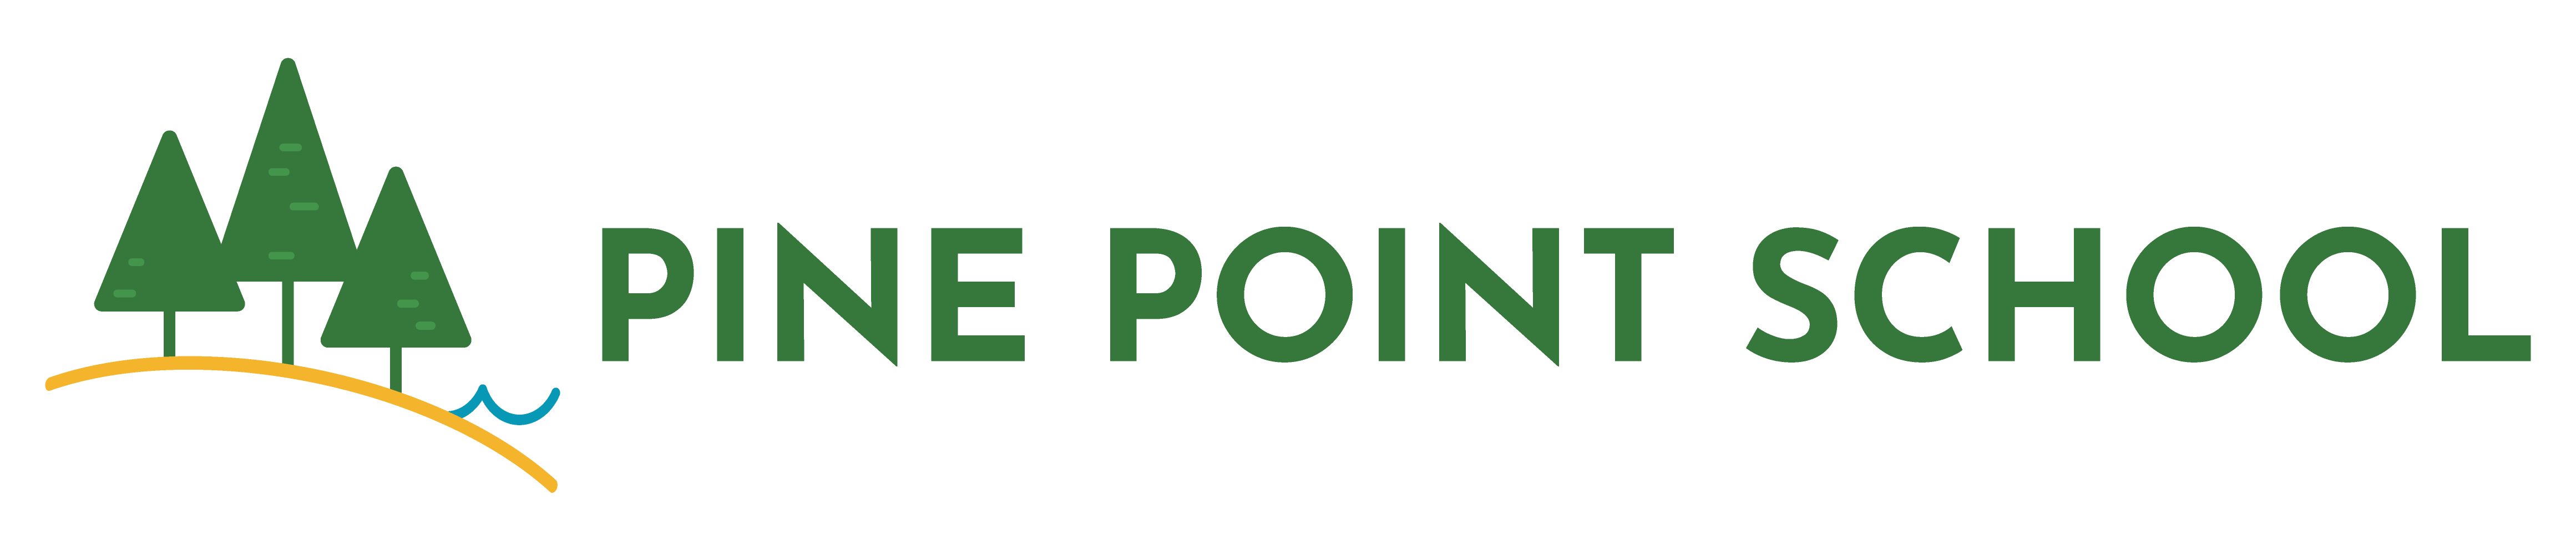 Pine Point School Logo